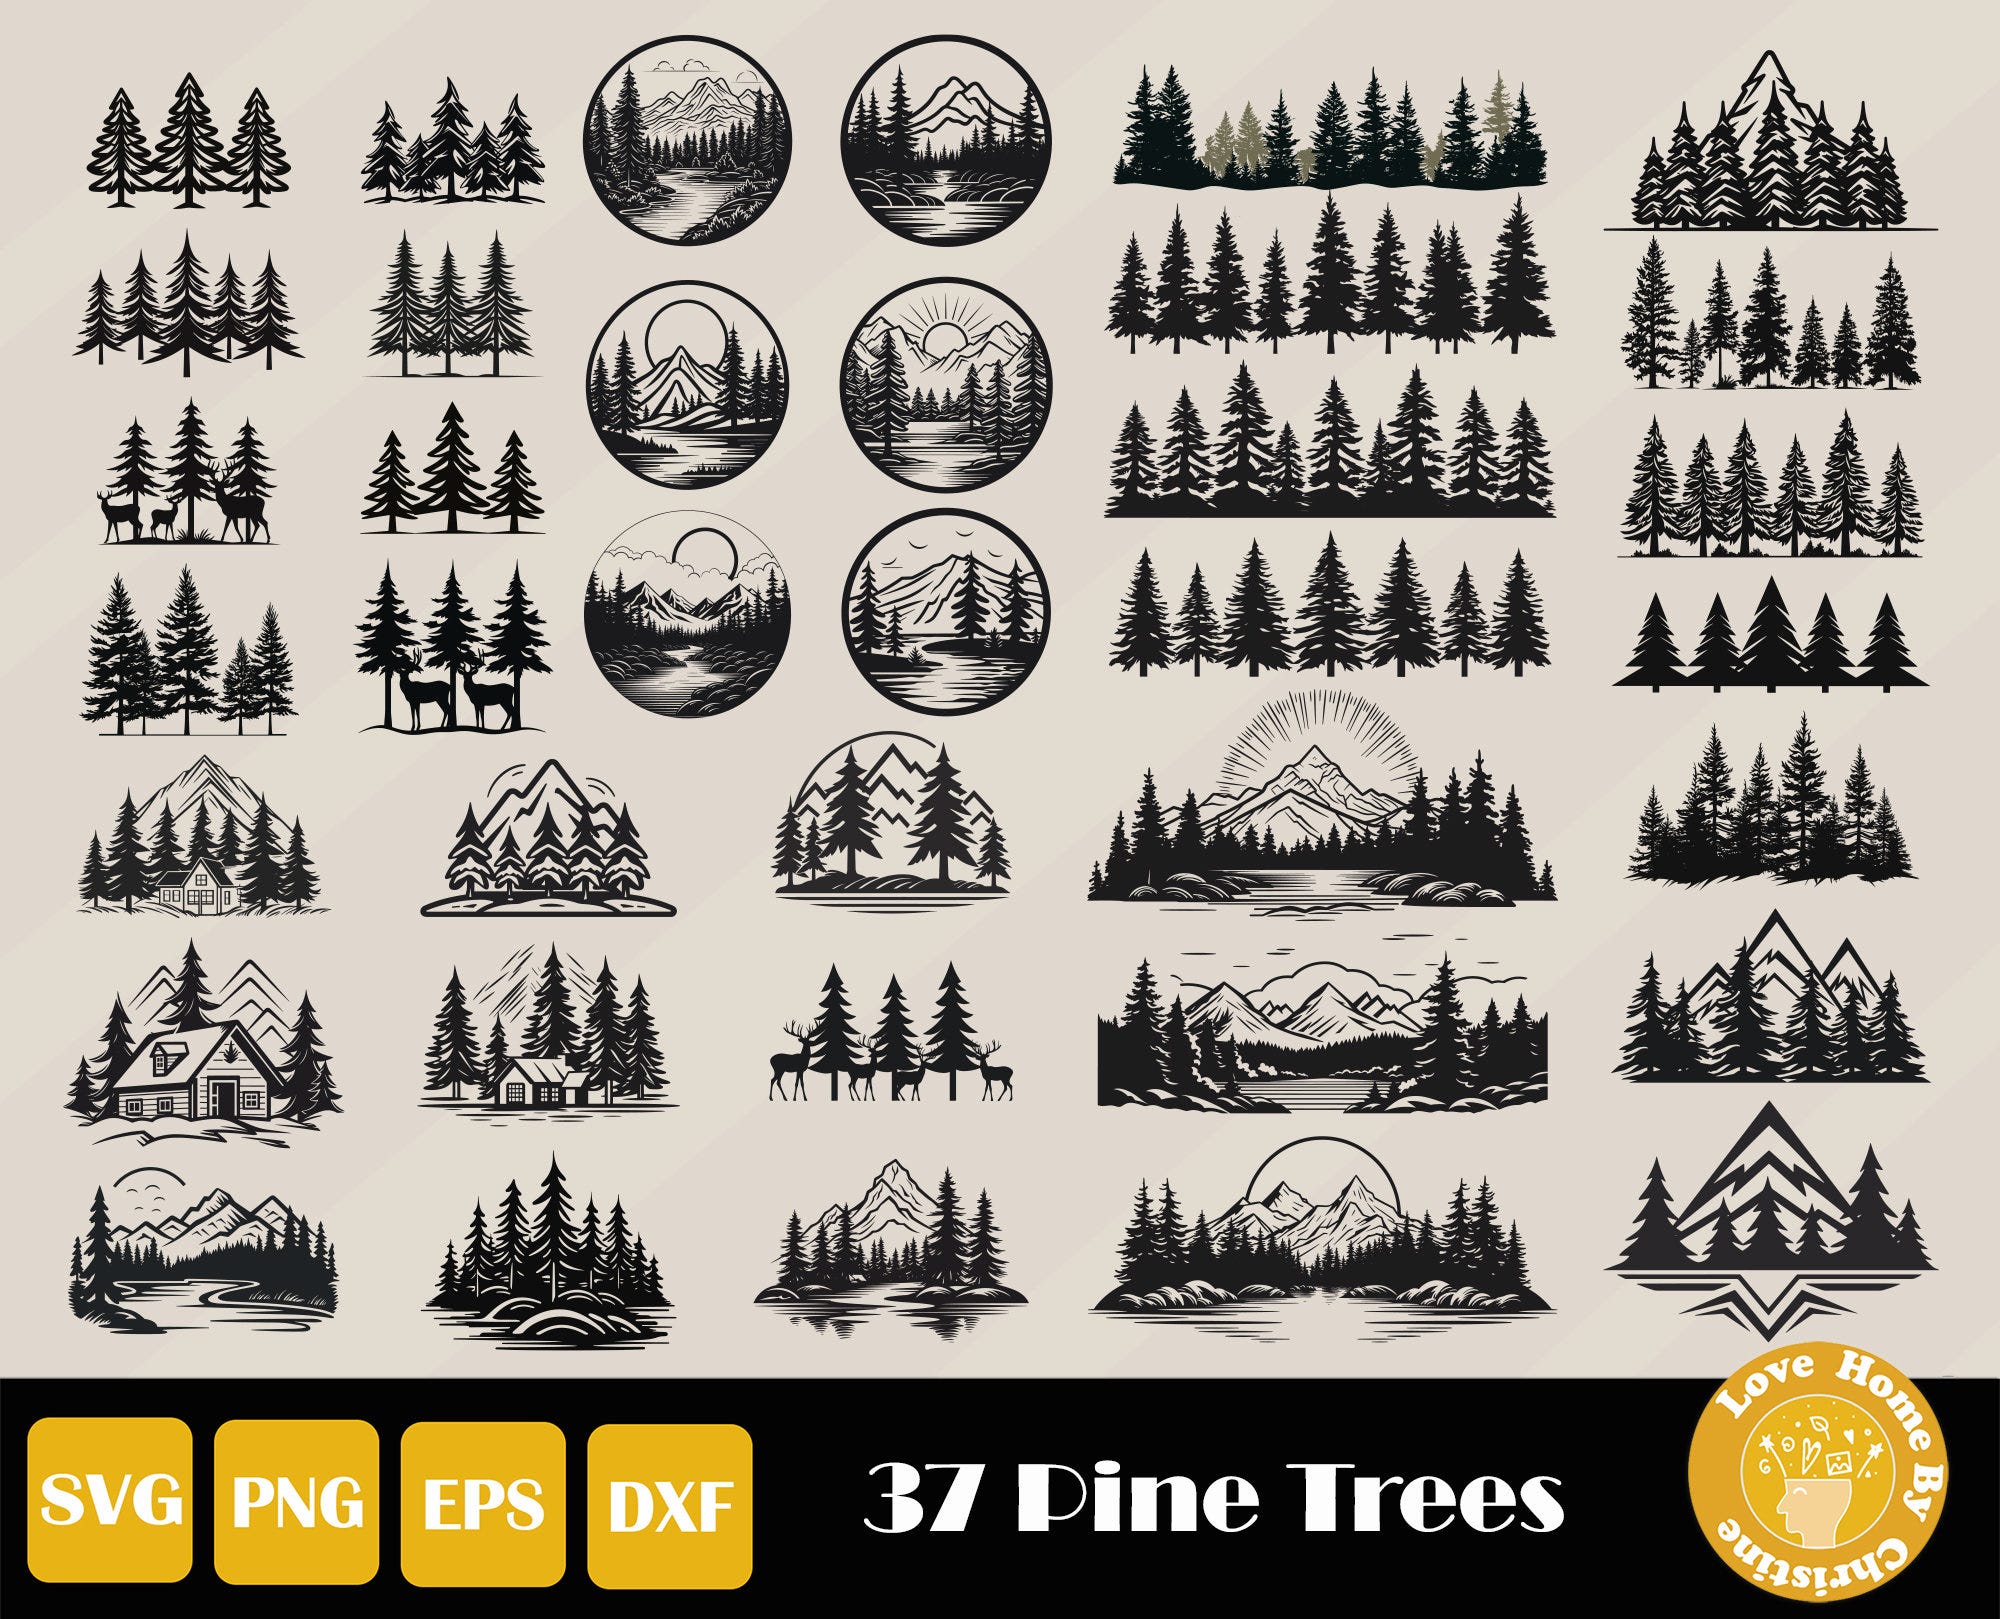 Pine Tree Svg, Christmas Tree Svg, Pine Tree Png, Tree Silhouette Svg, Pine Tree Bundle, Nature Svg, Christmas Shirt Svg, Instant Download